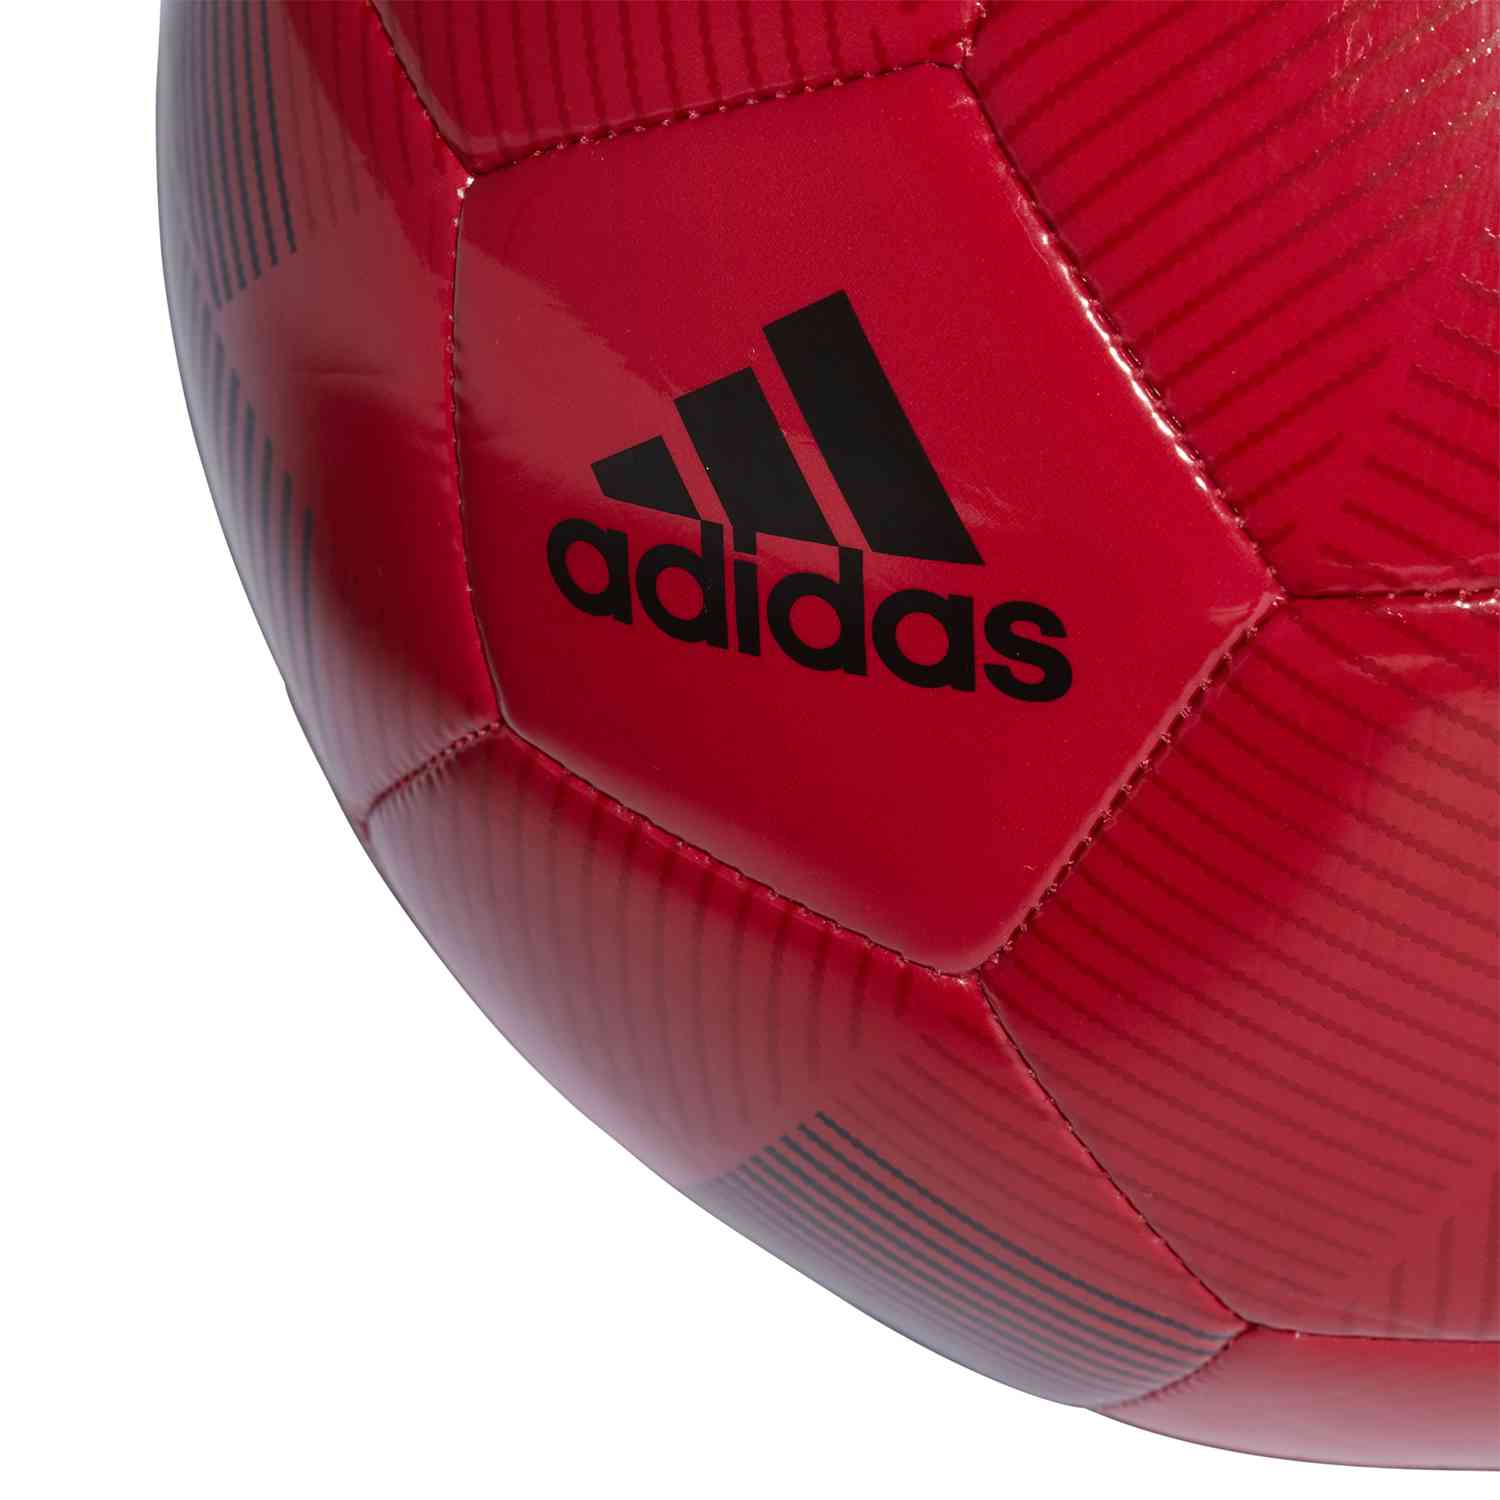 adidas Manchester United Soccer Ball 